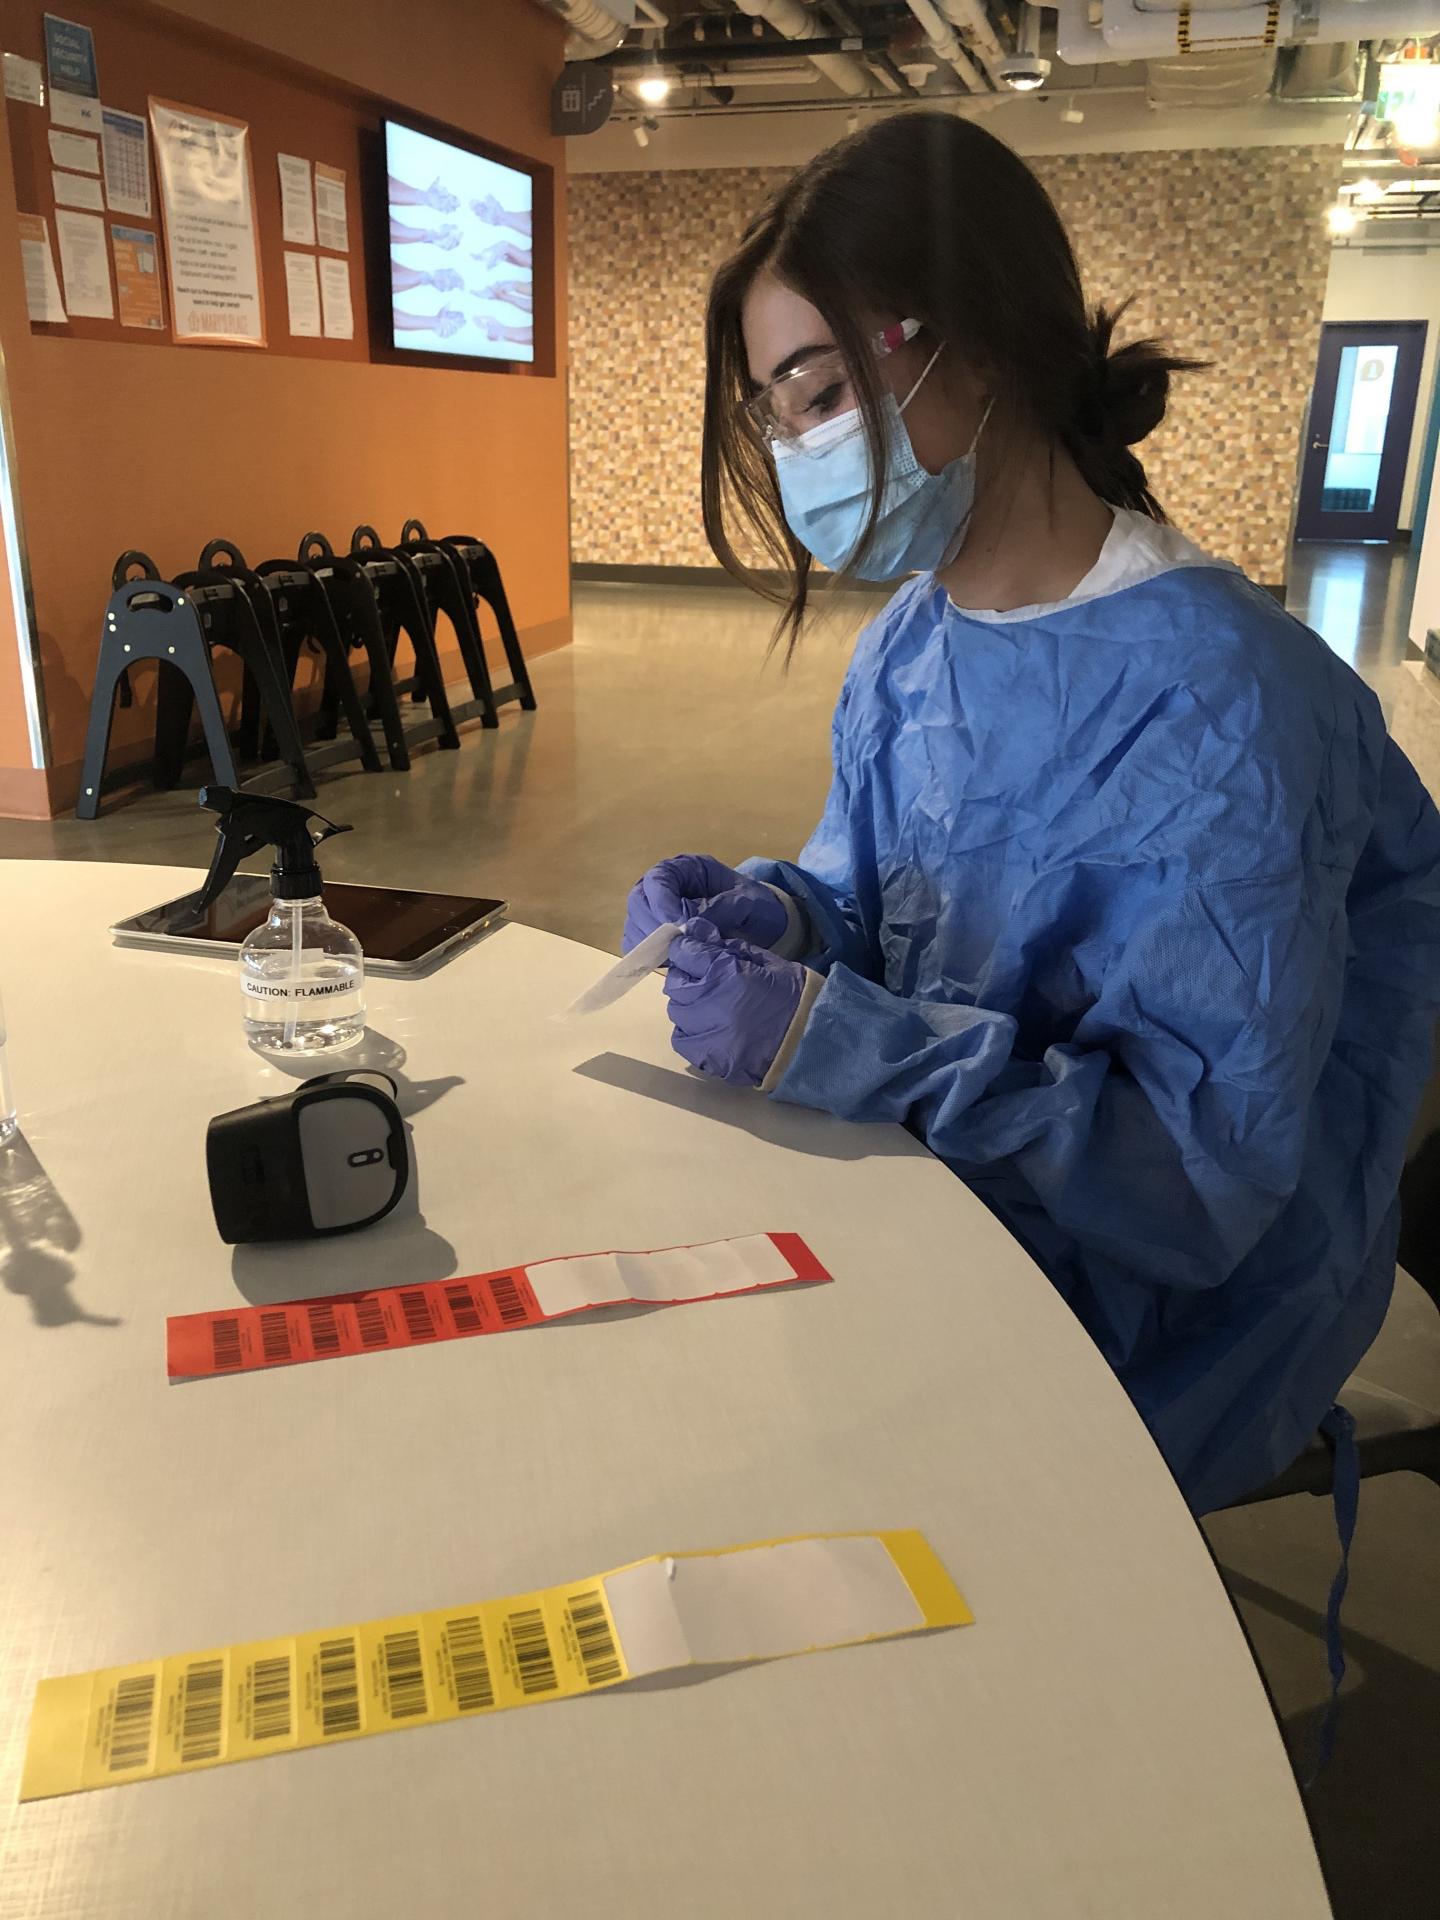 Preparing to Test for Coronavirus at a Seattle Homeless Shelter